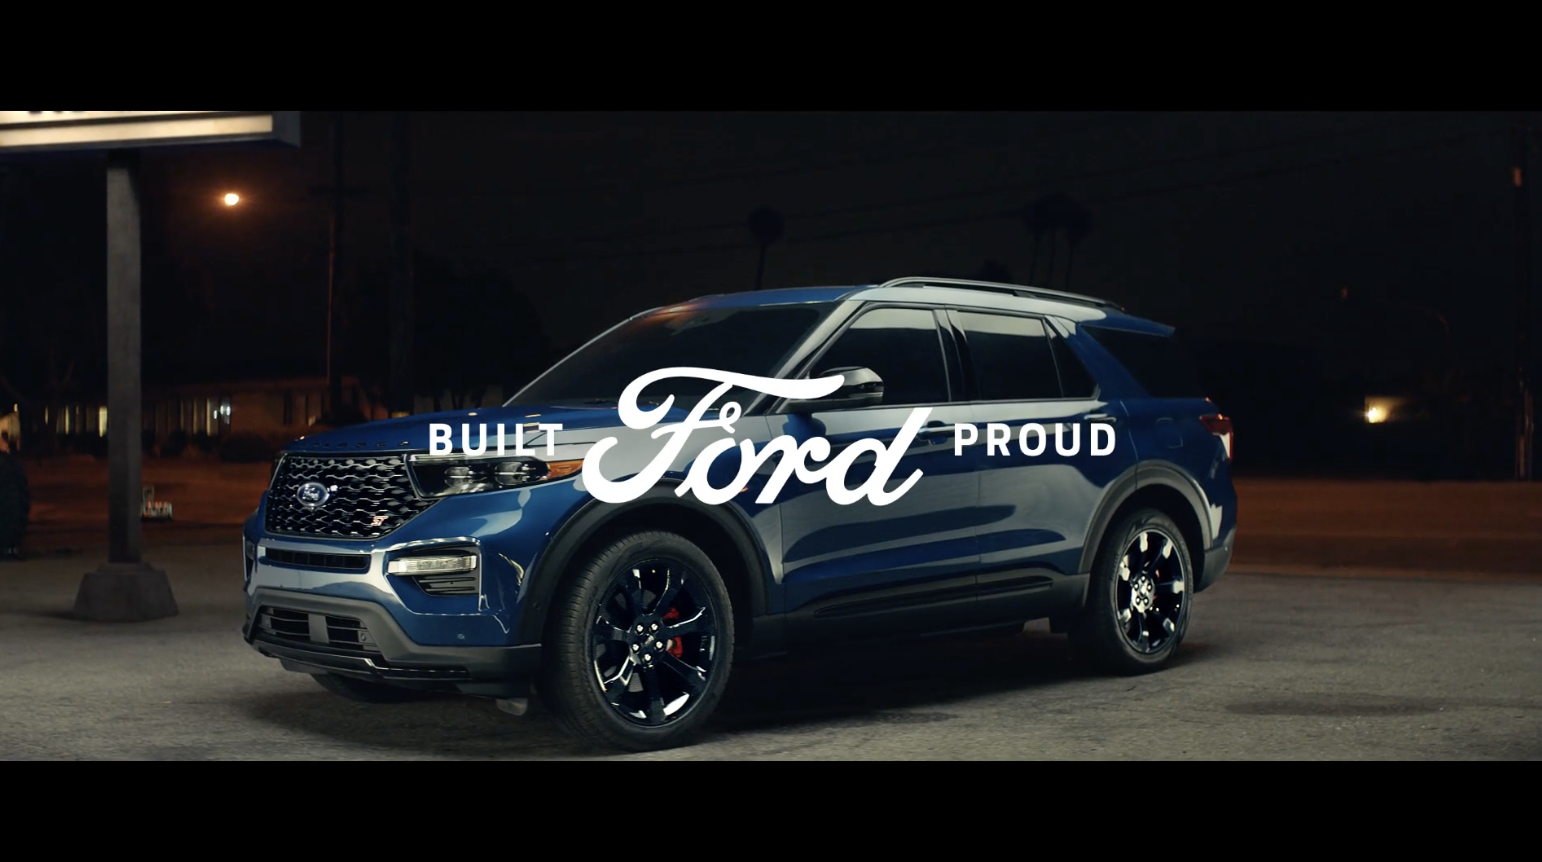 Ford: Explorer Built Ford Proud